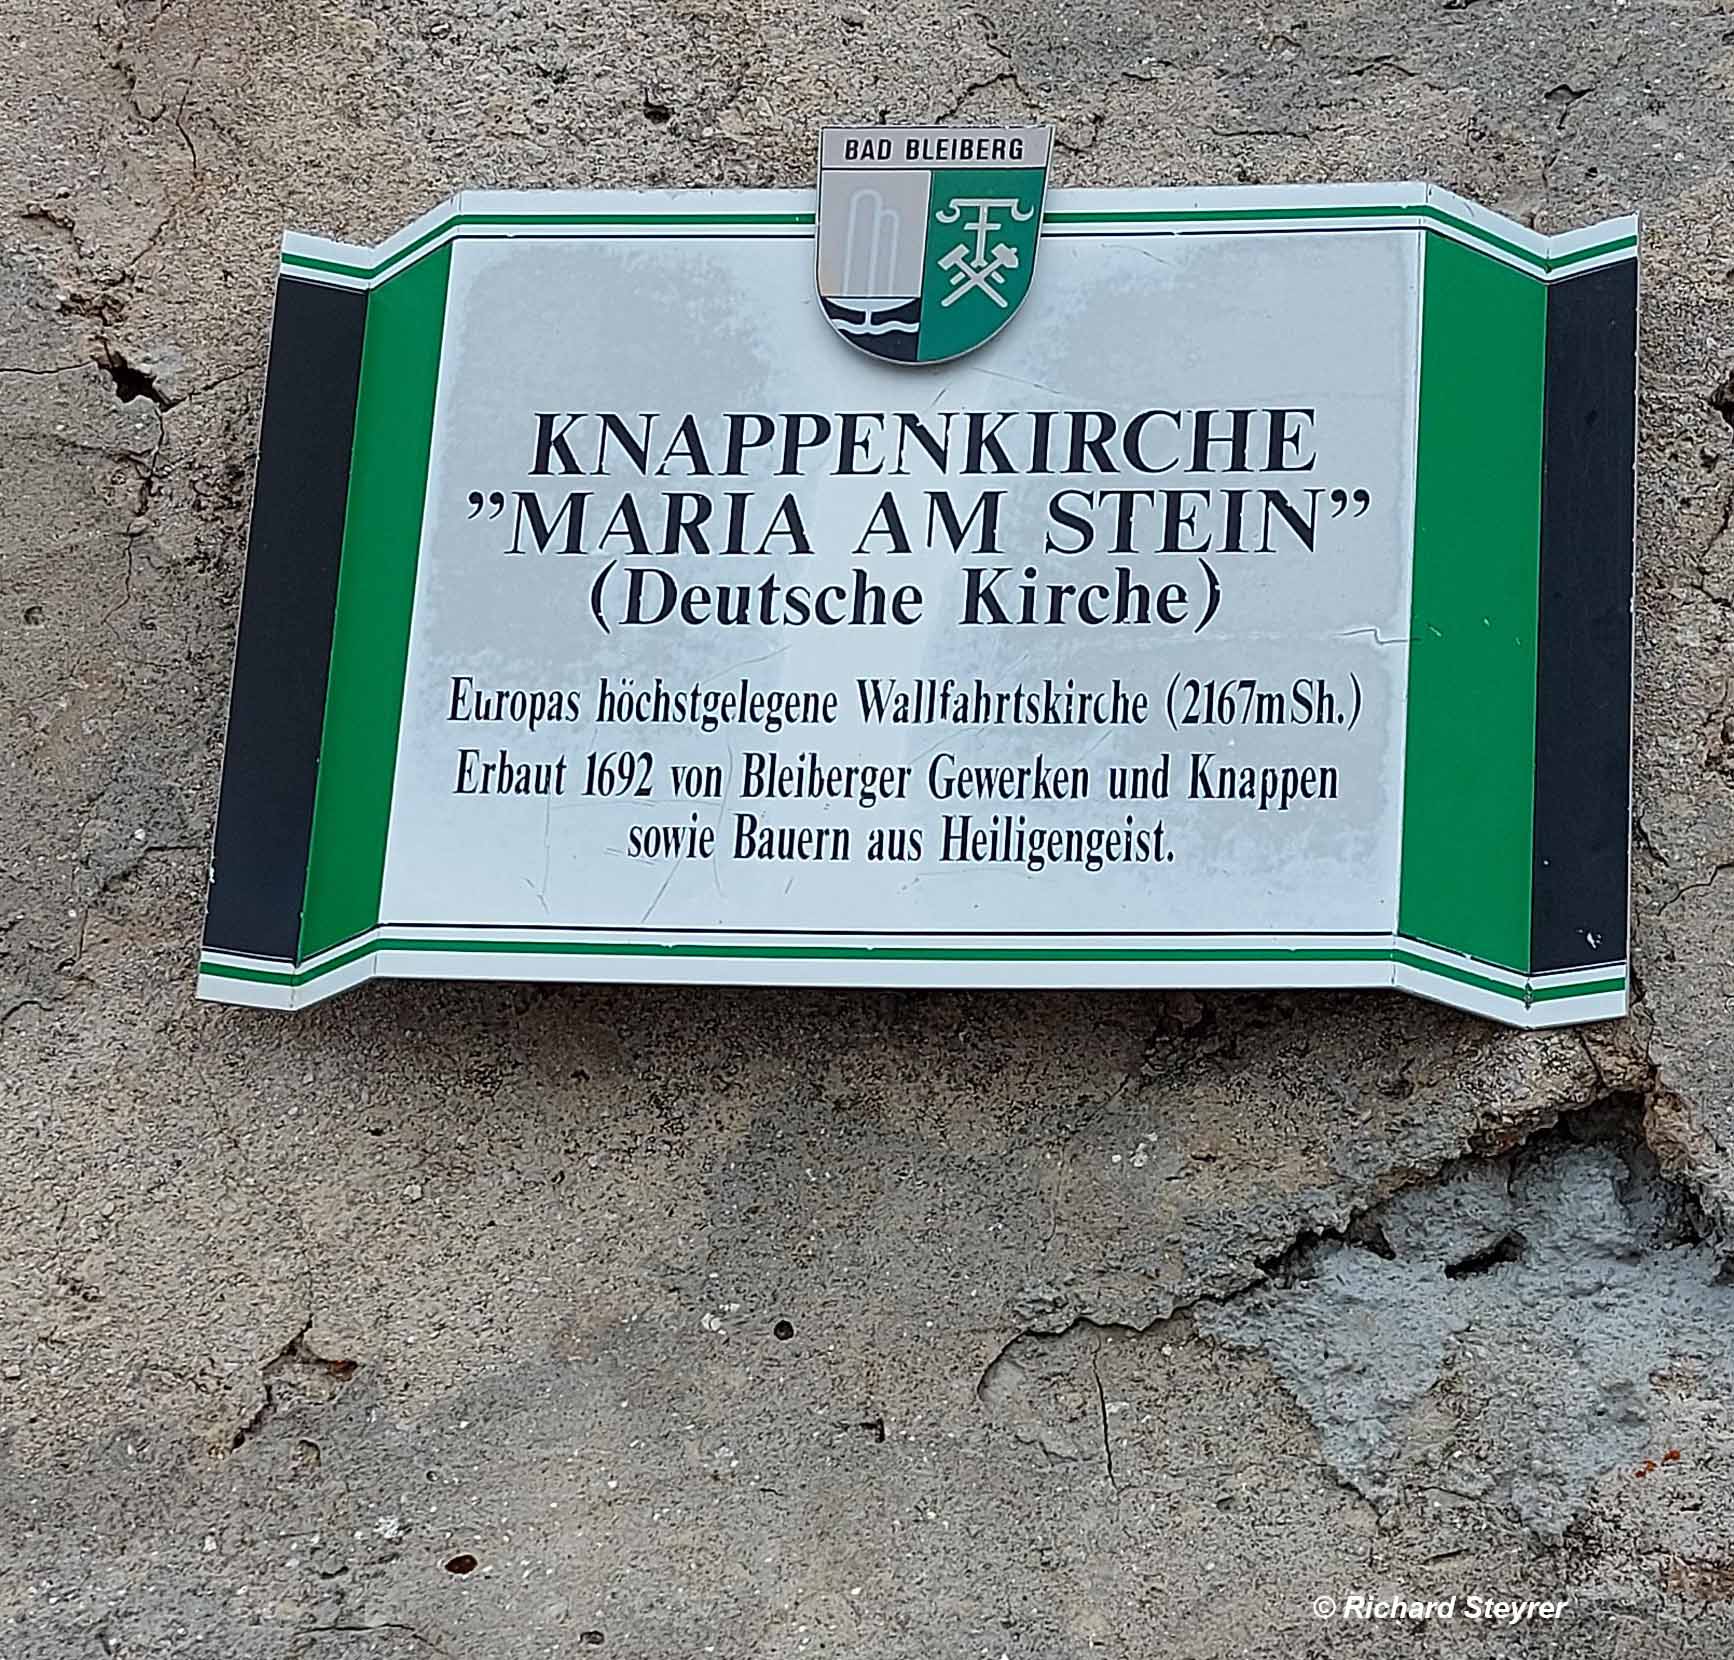 Knappenkirche "Maria am Stein" am Dobratsch